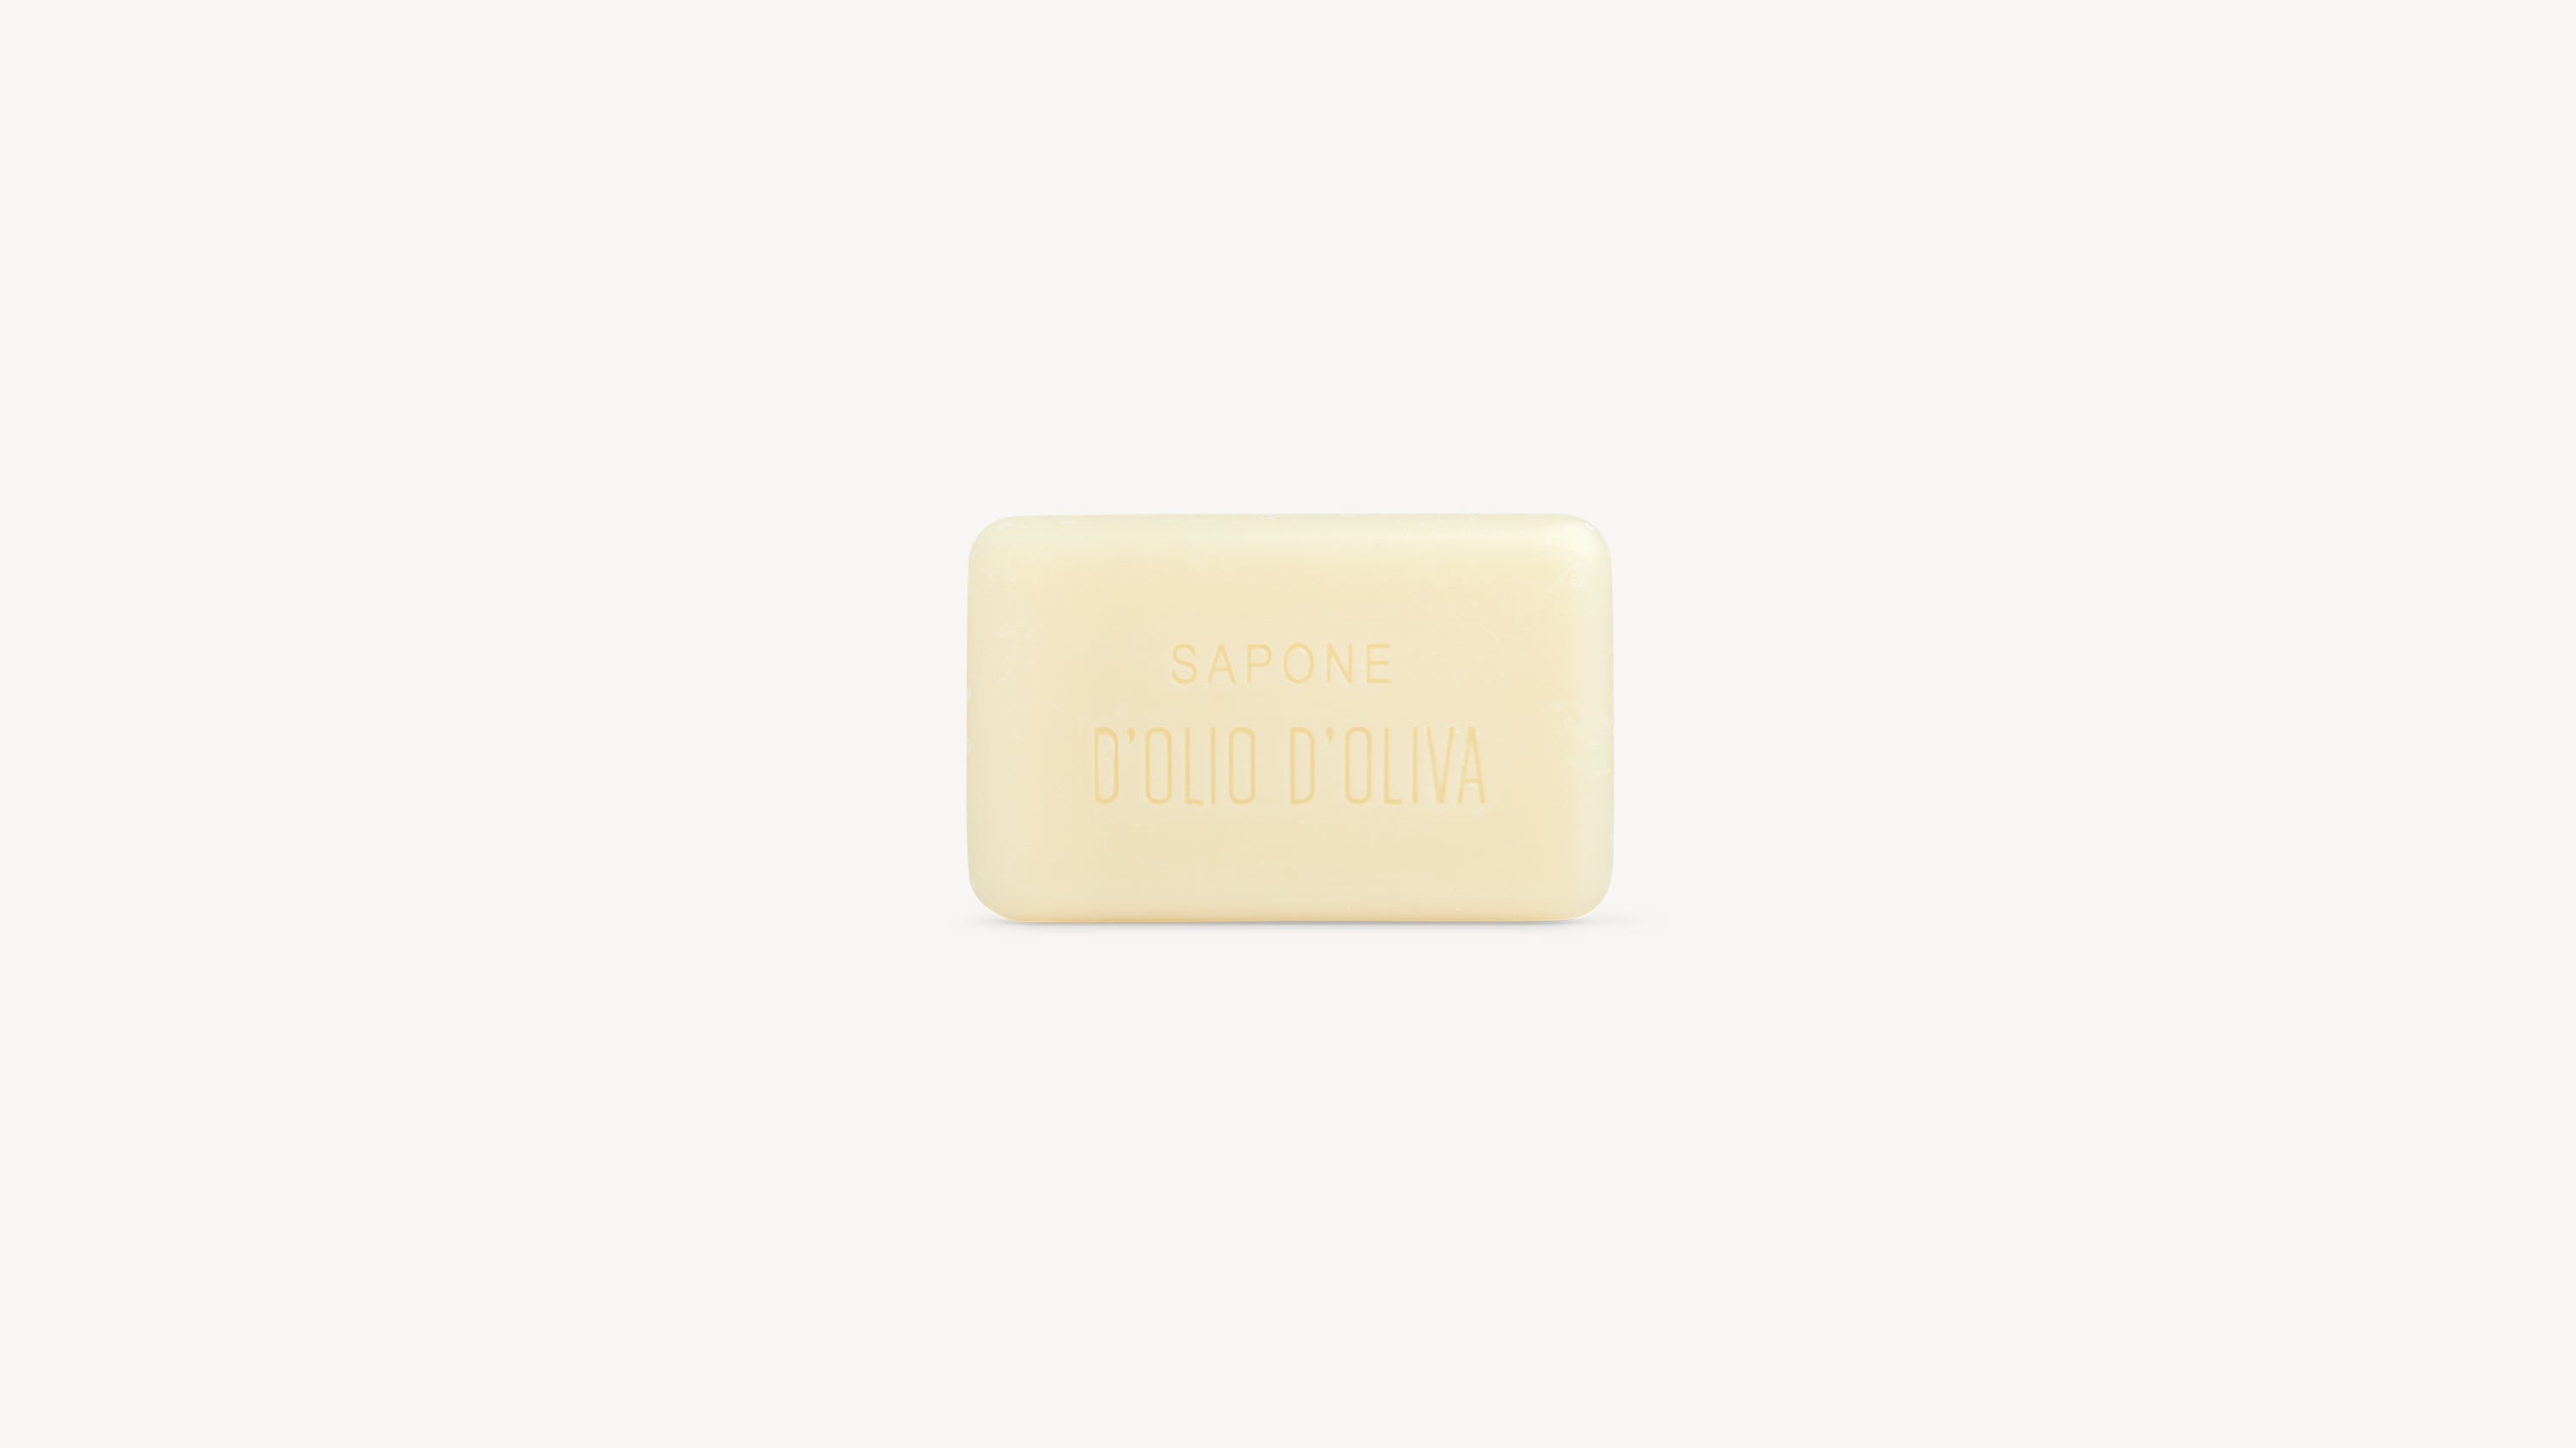 Olive Oil Soap Body Care officina-smn-usa-ca.myshopify.com Officina Profumo Farmaceutica di Santa Maria Novella - US